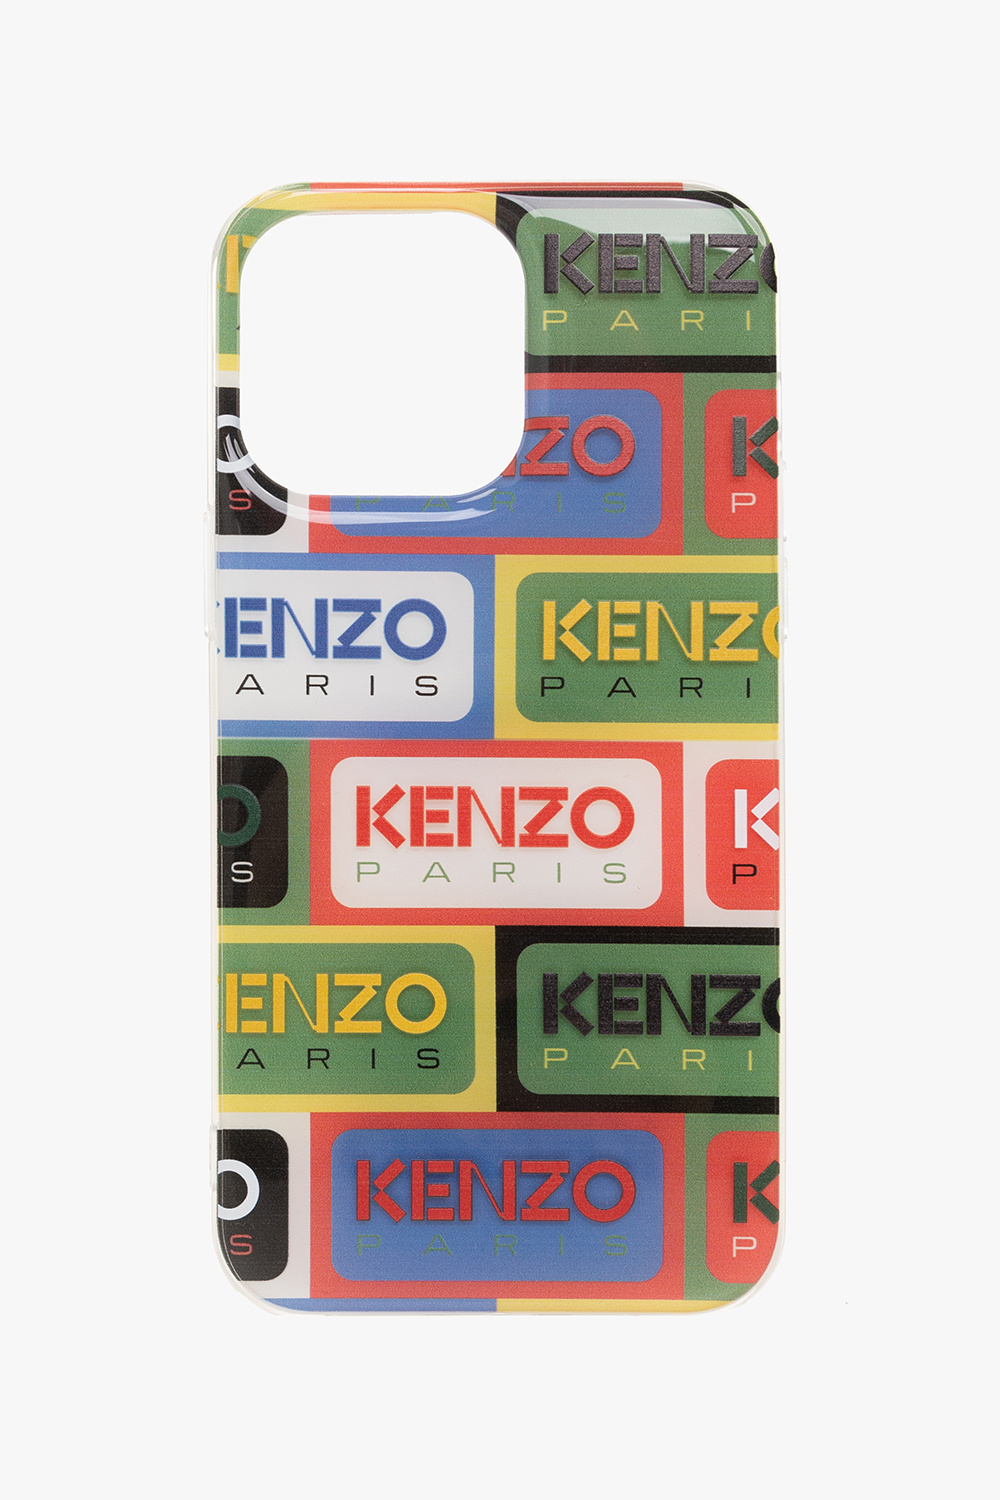 Kenzo Enter the world